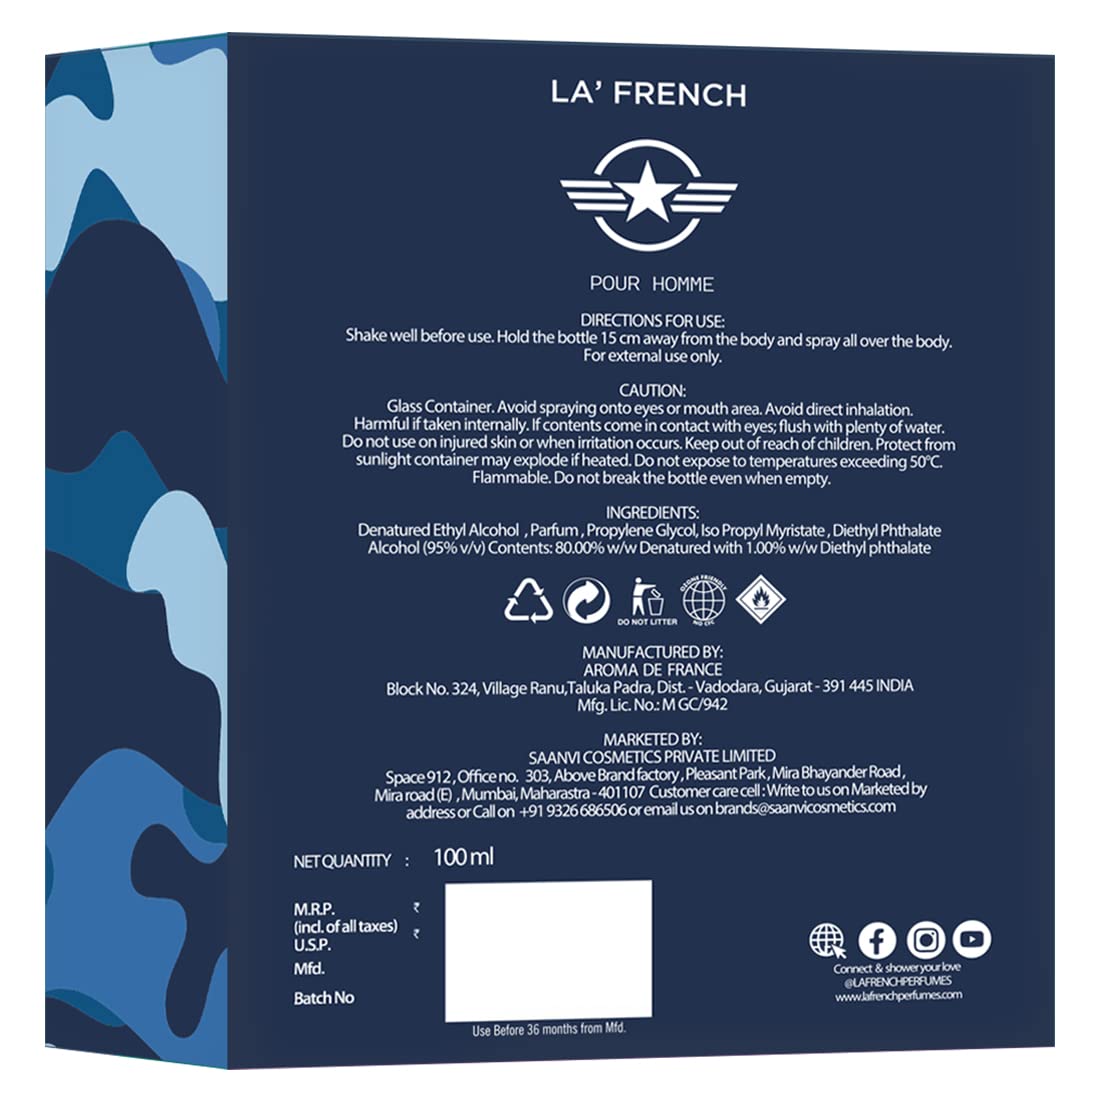 LA' French Kombat Liquid Perfume For Men, 100ml Luxury Gift, Extra Long Lasting Smell, Premium French Fragrance Scent, Eau De Parfum (Fresh)